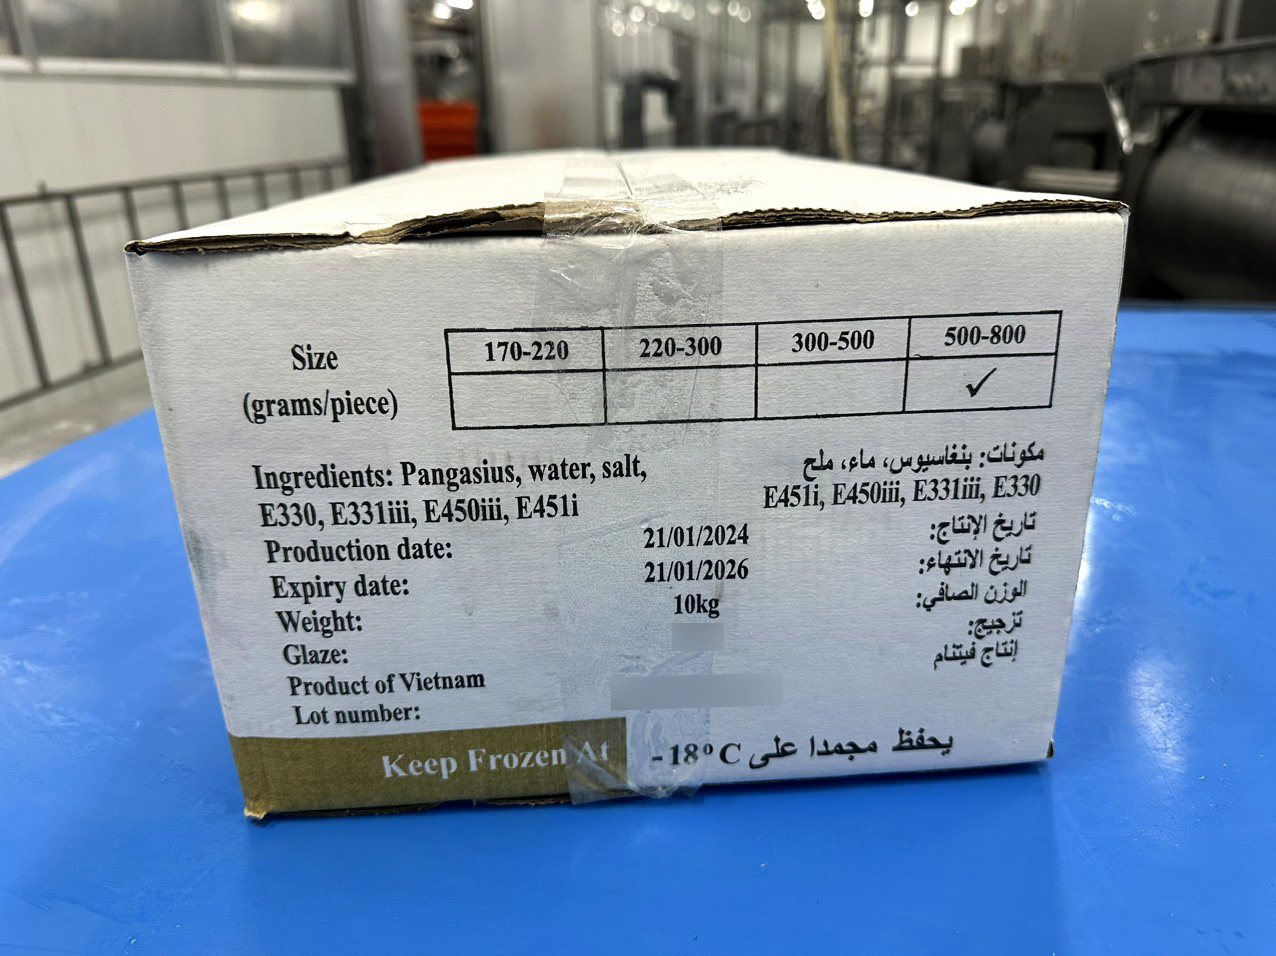 Master carton - premium-grade pangasius fillets